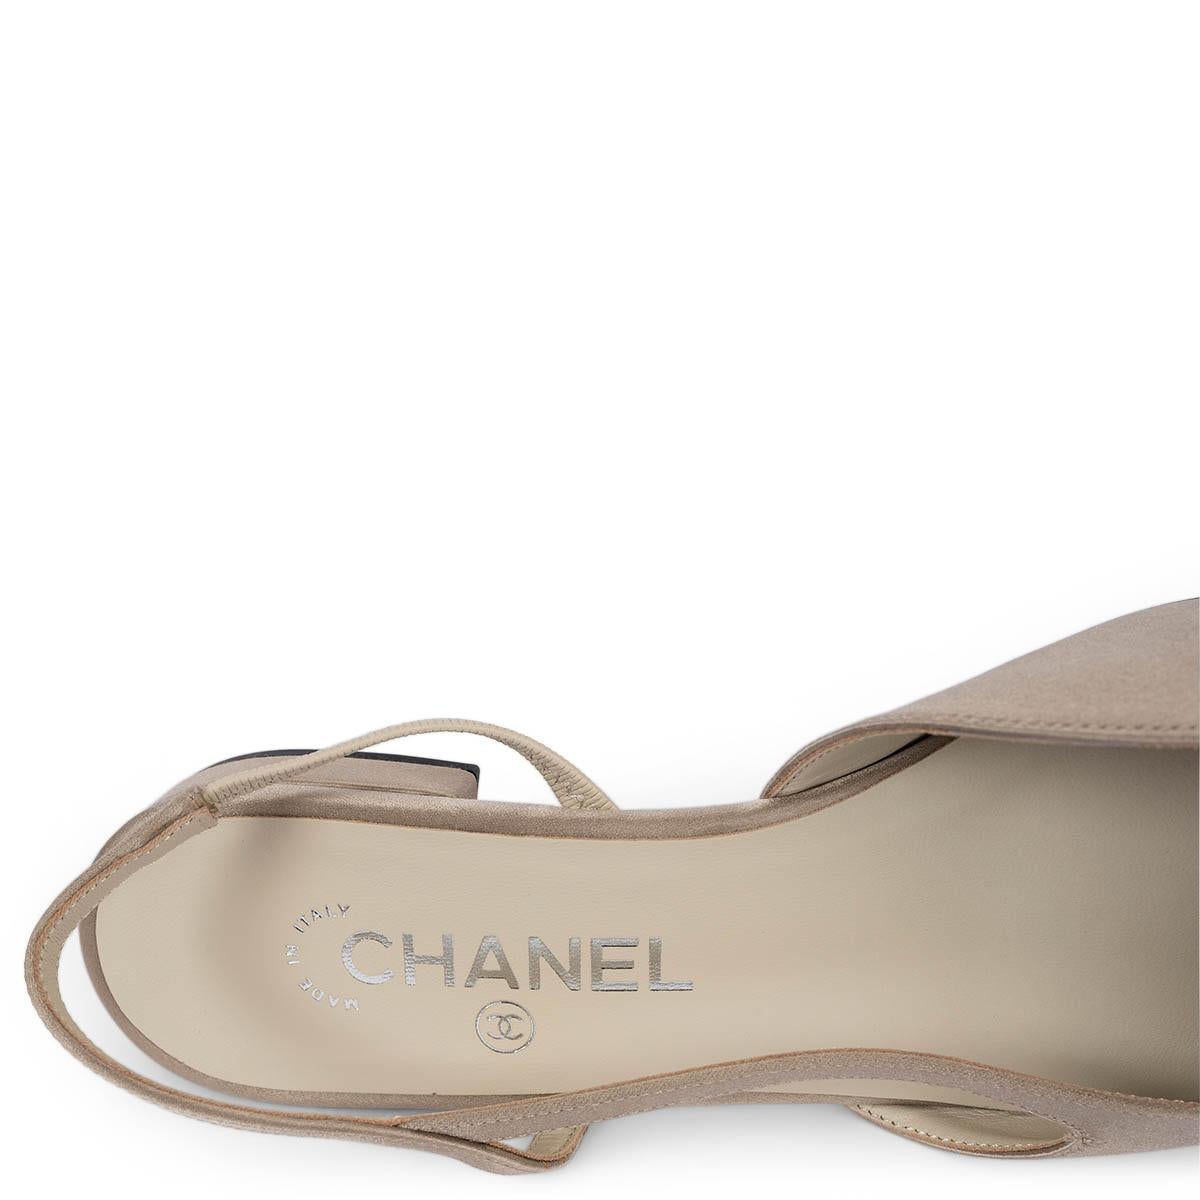 CHANEL beige & grey SATIN SLINGBACK Flats Shoes 39 4